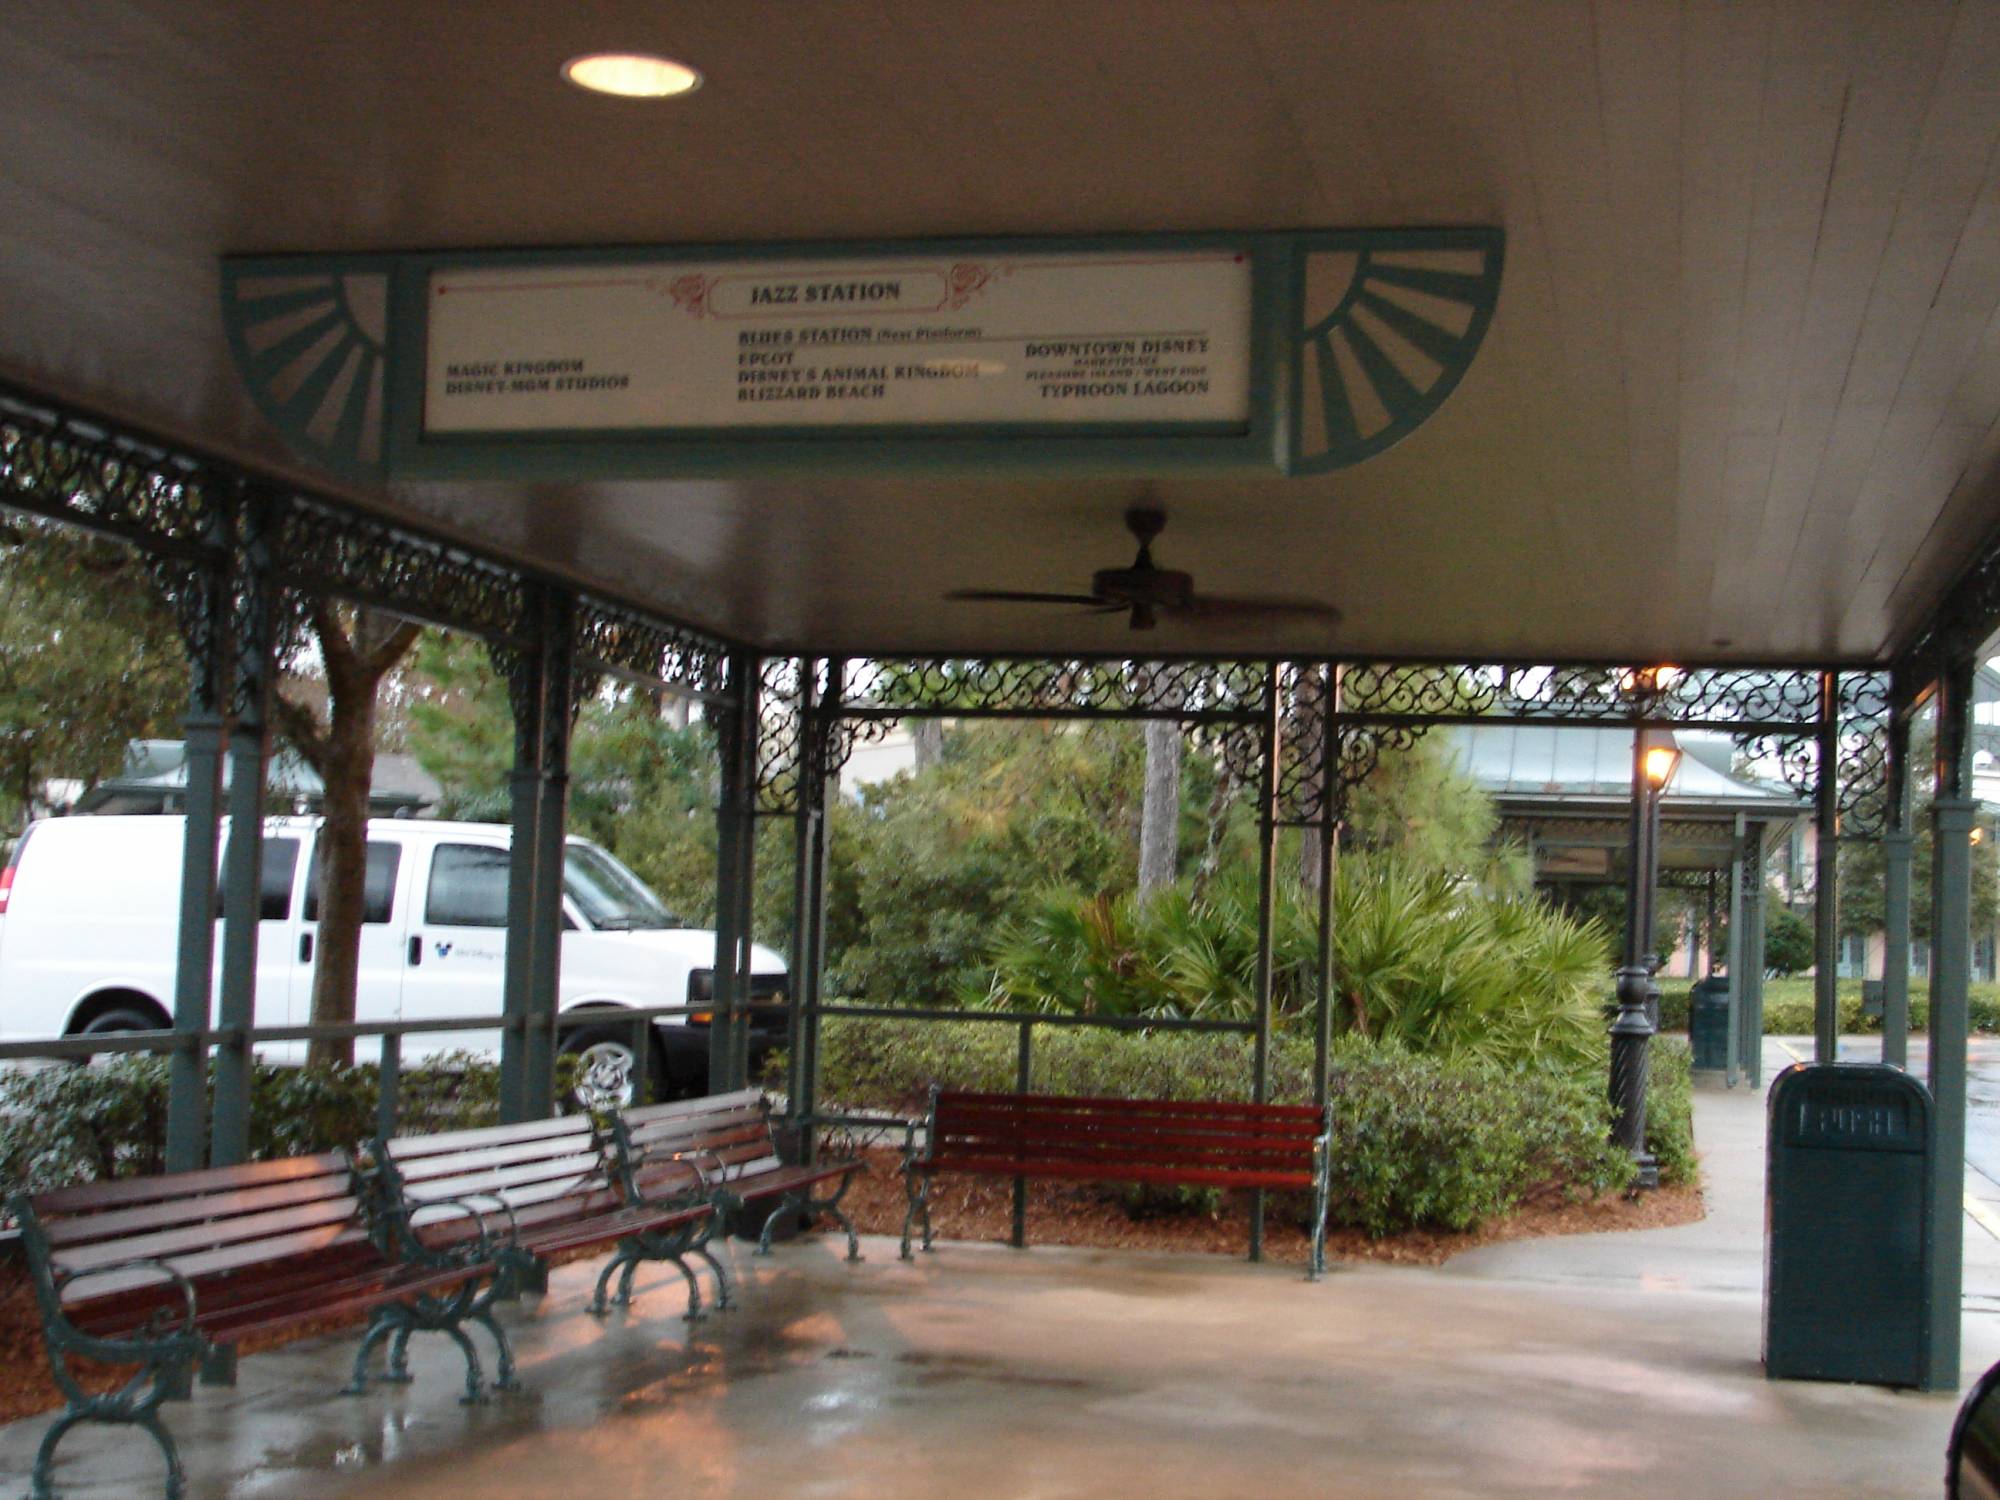 Port Orleans French Quarter - Jazz Station Bus Stop